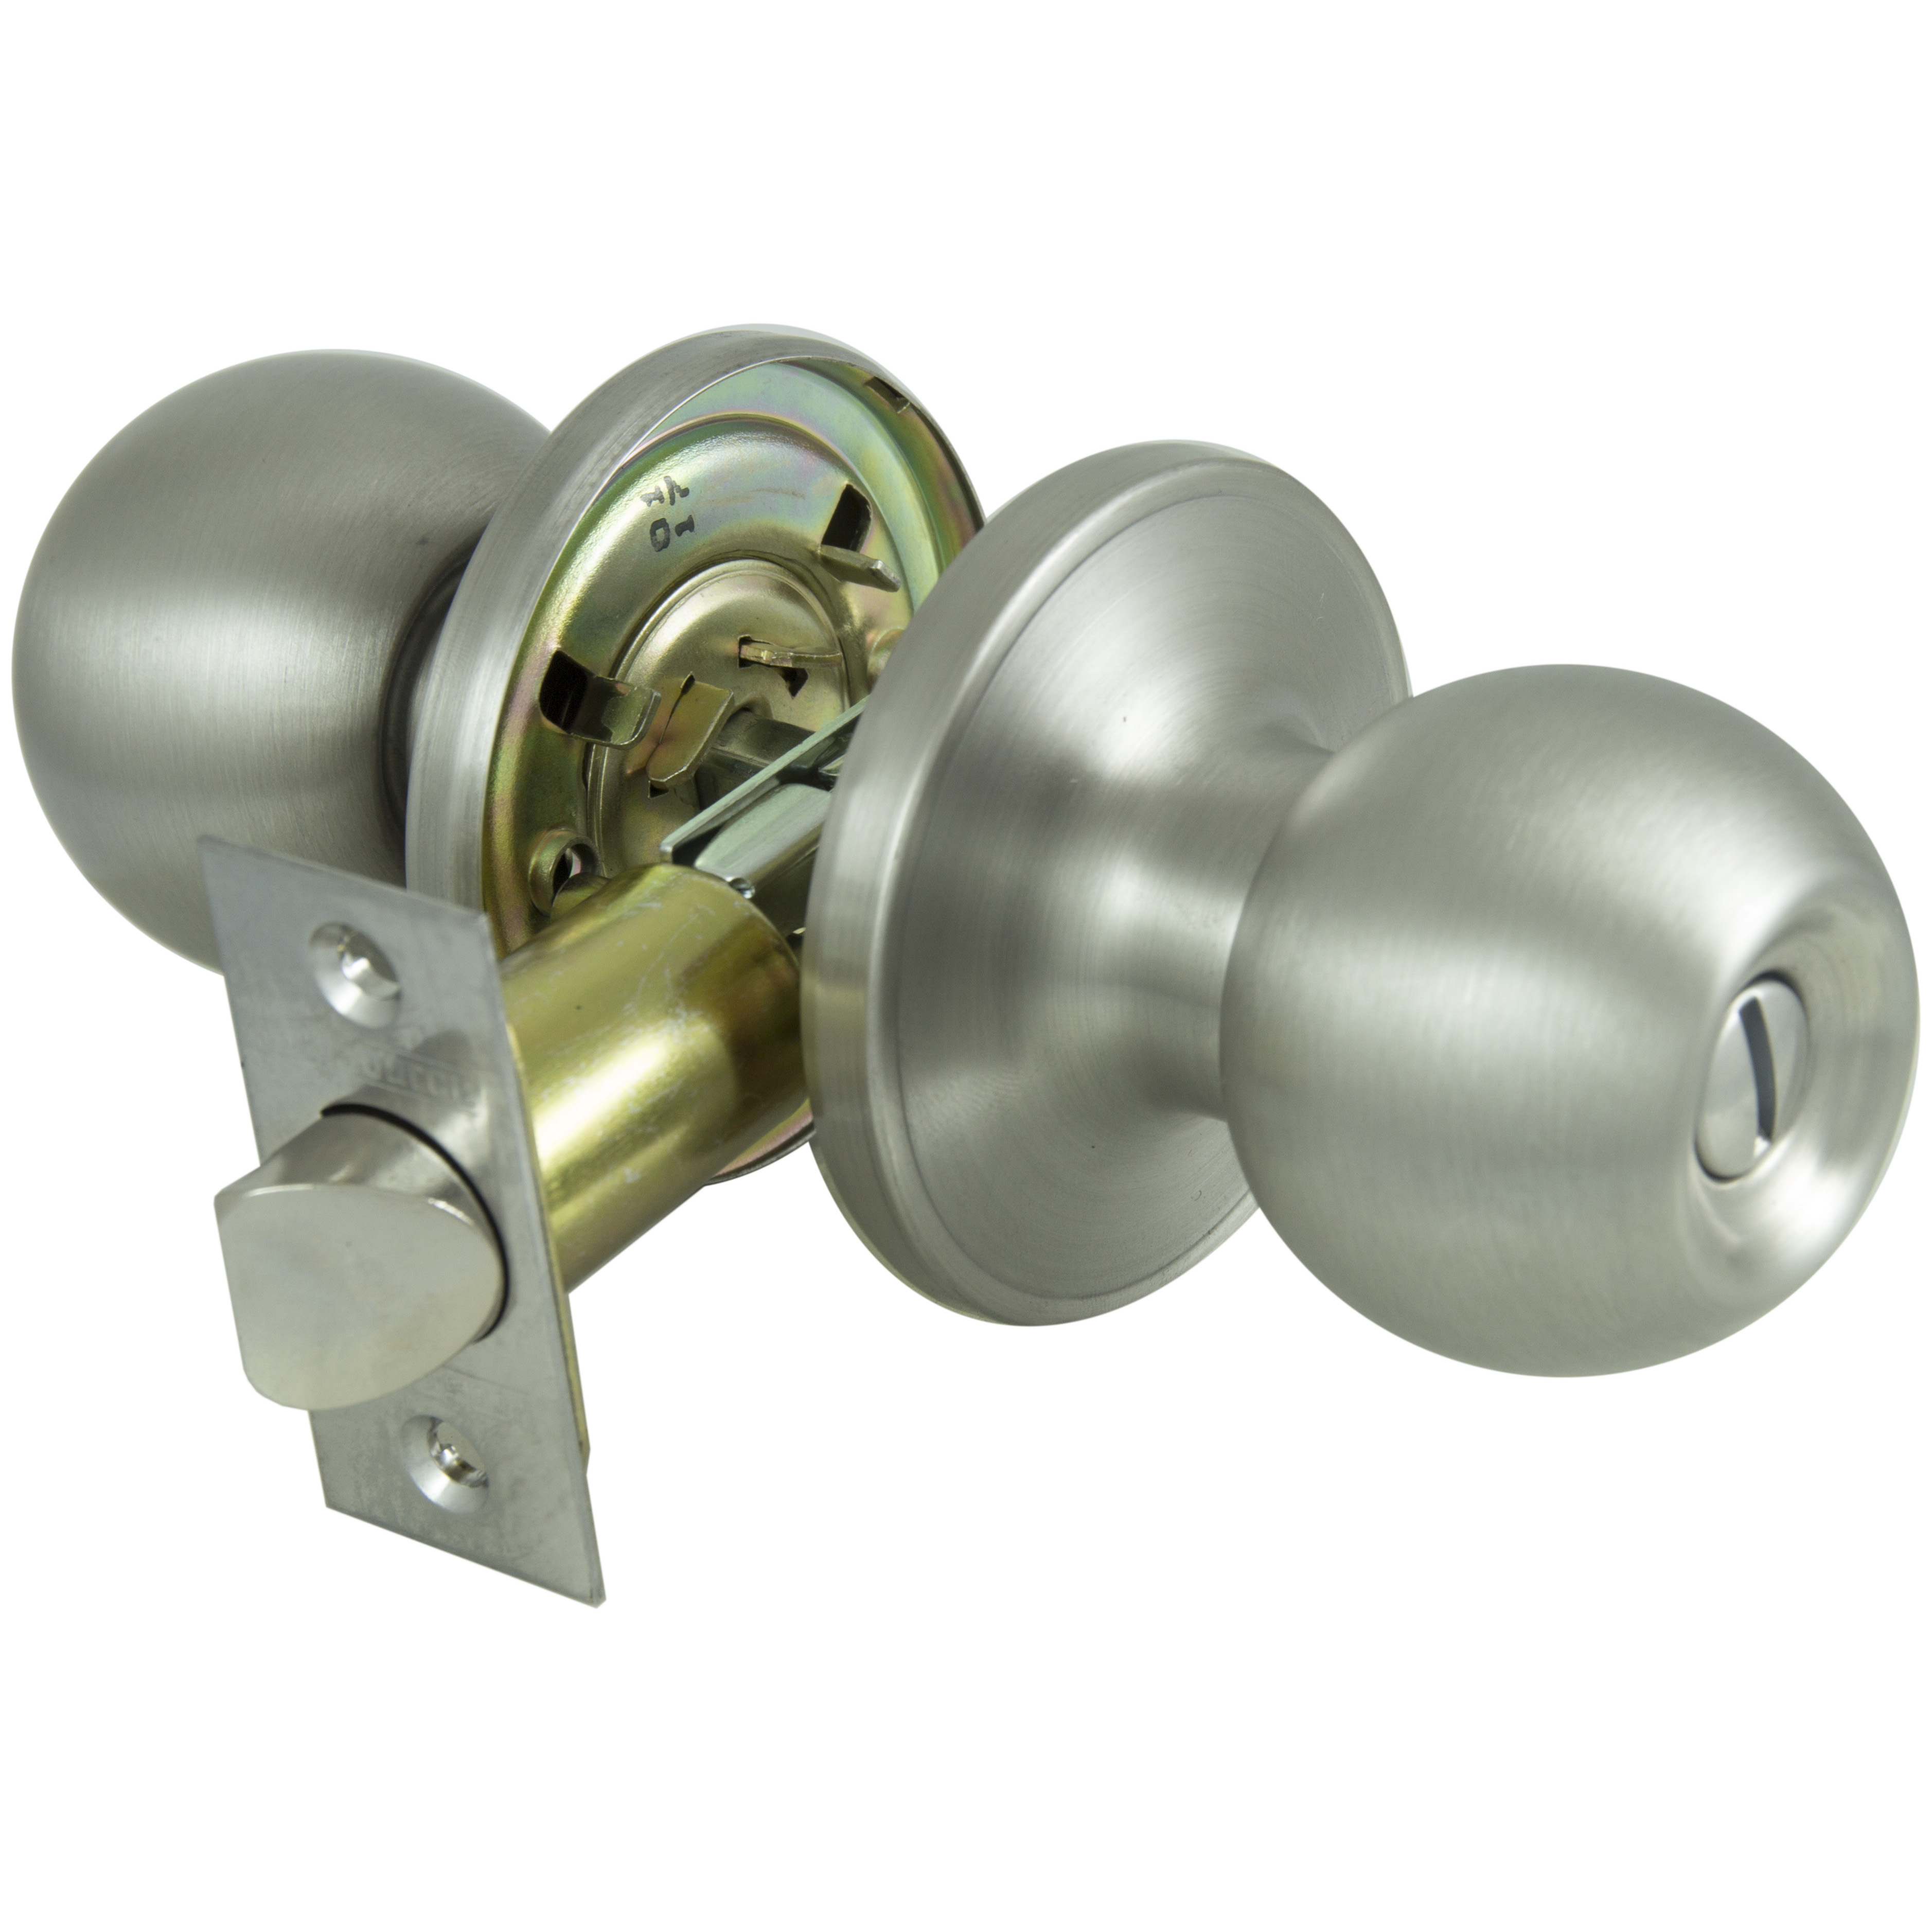 Privacy Lockset, Tubular Design, Stainless Steel